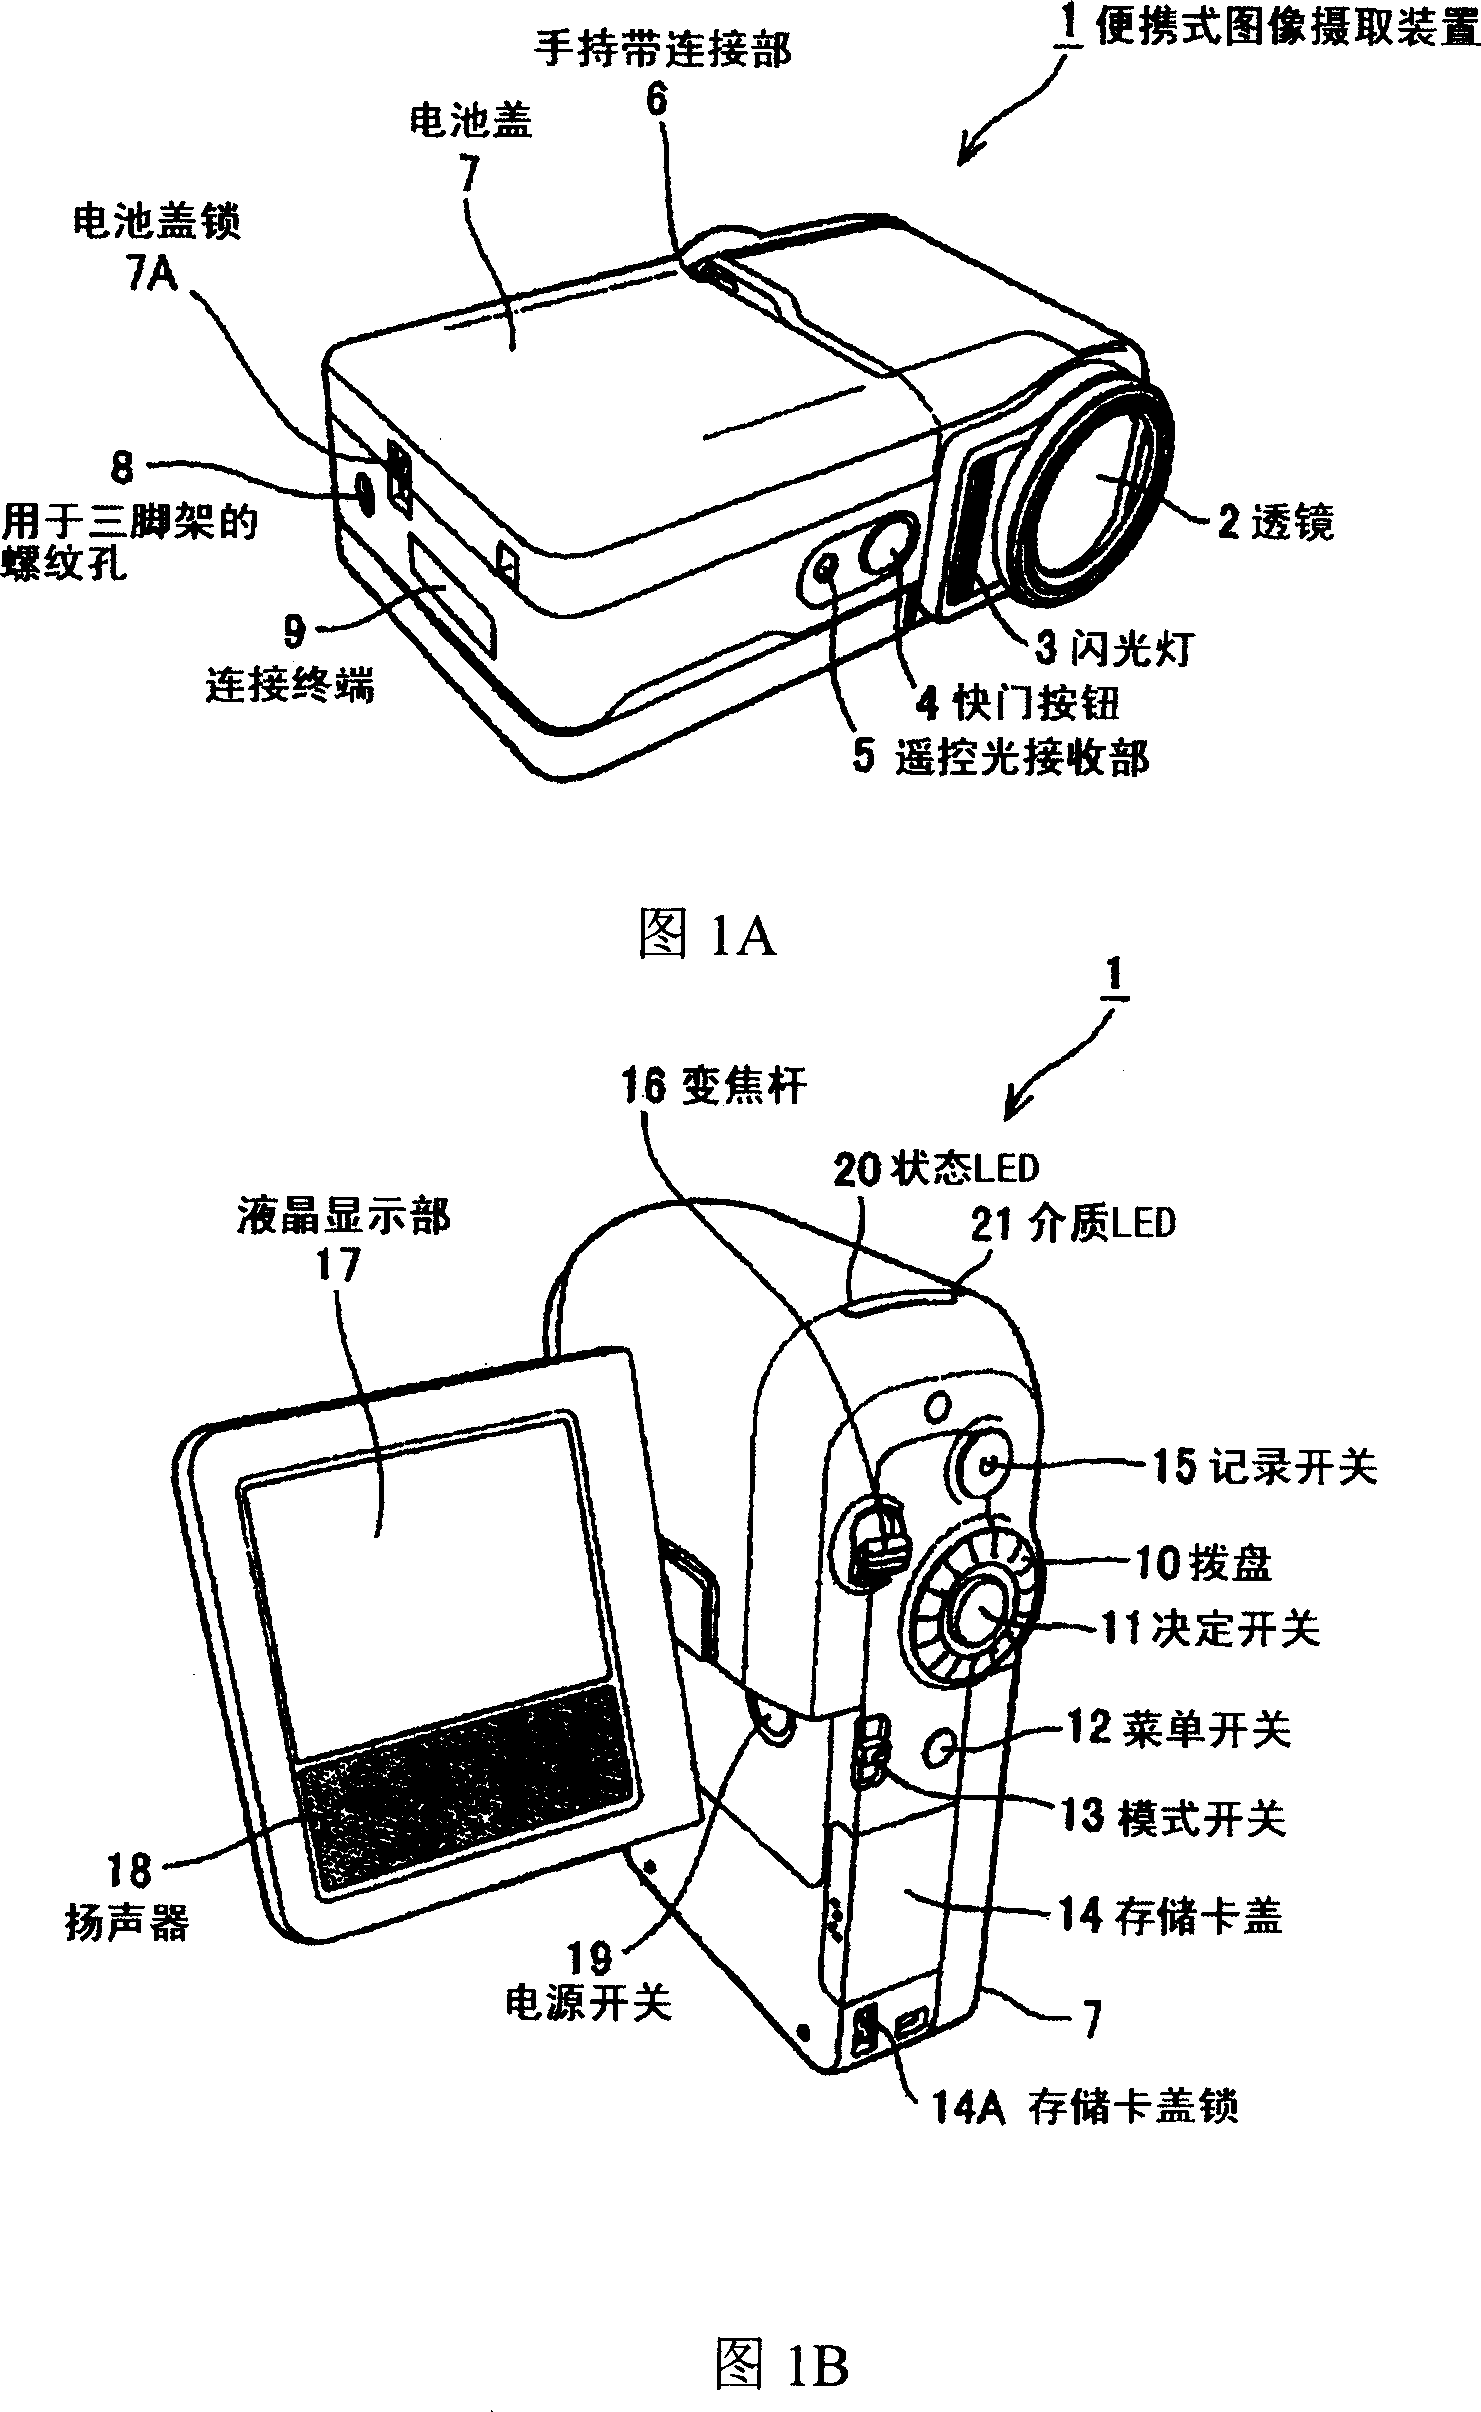 Portable image pickup device